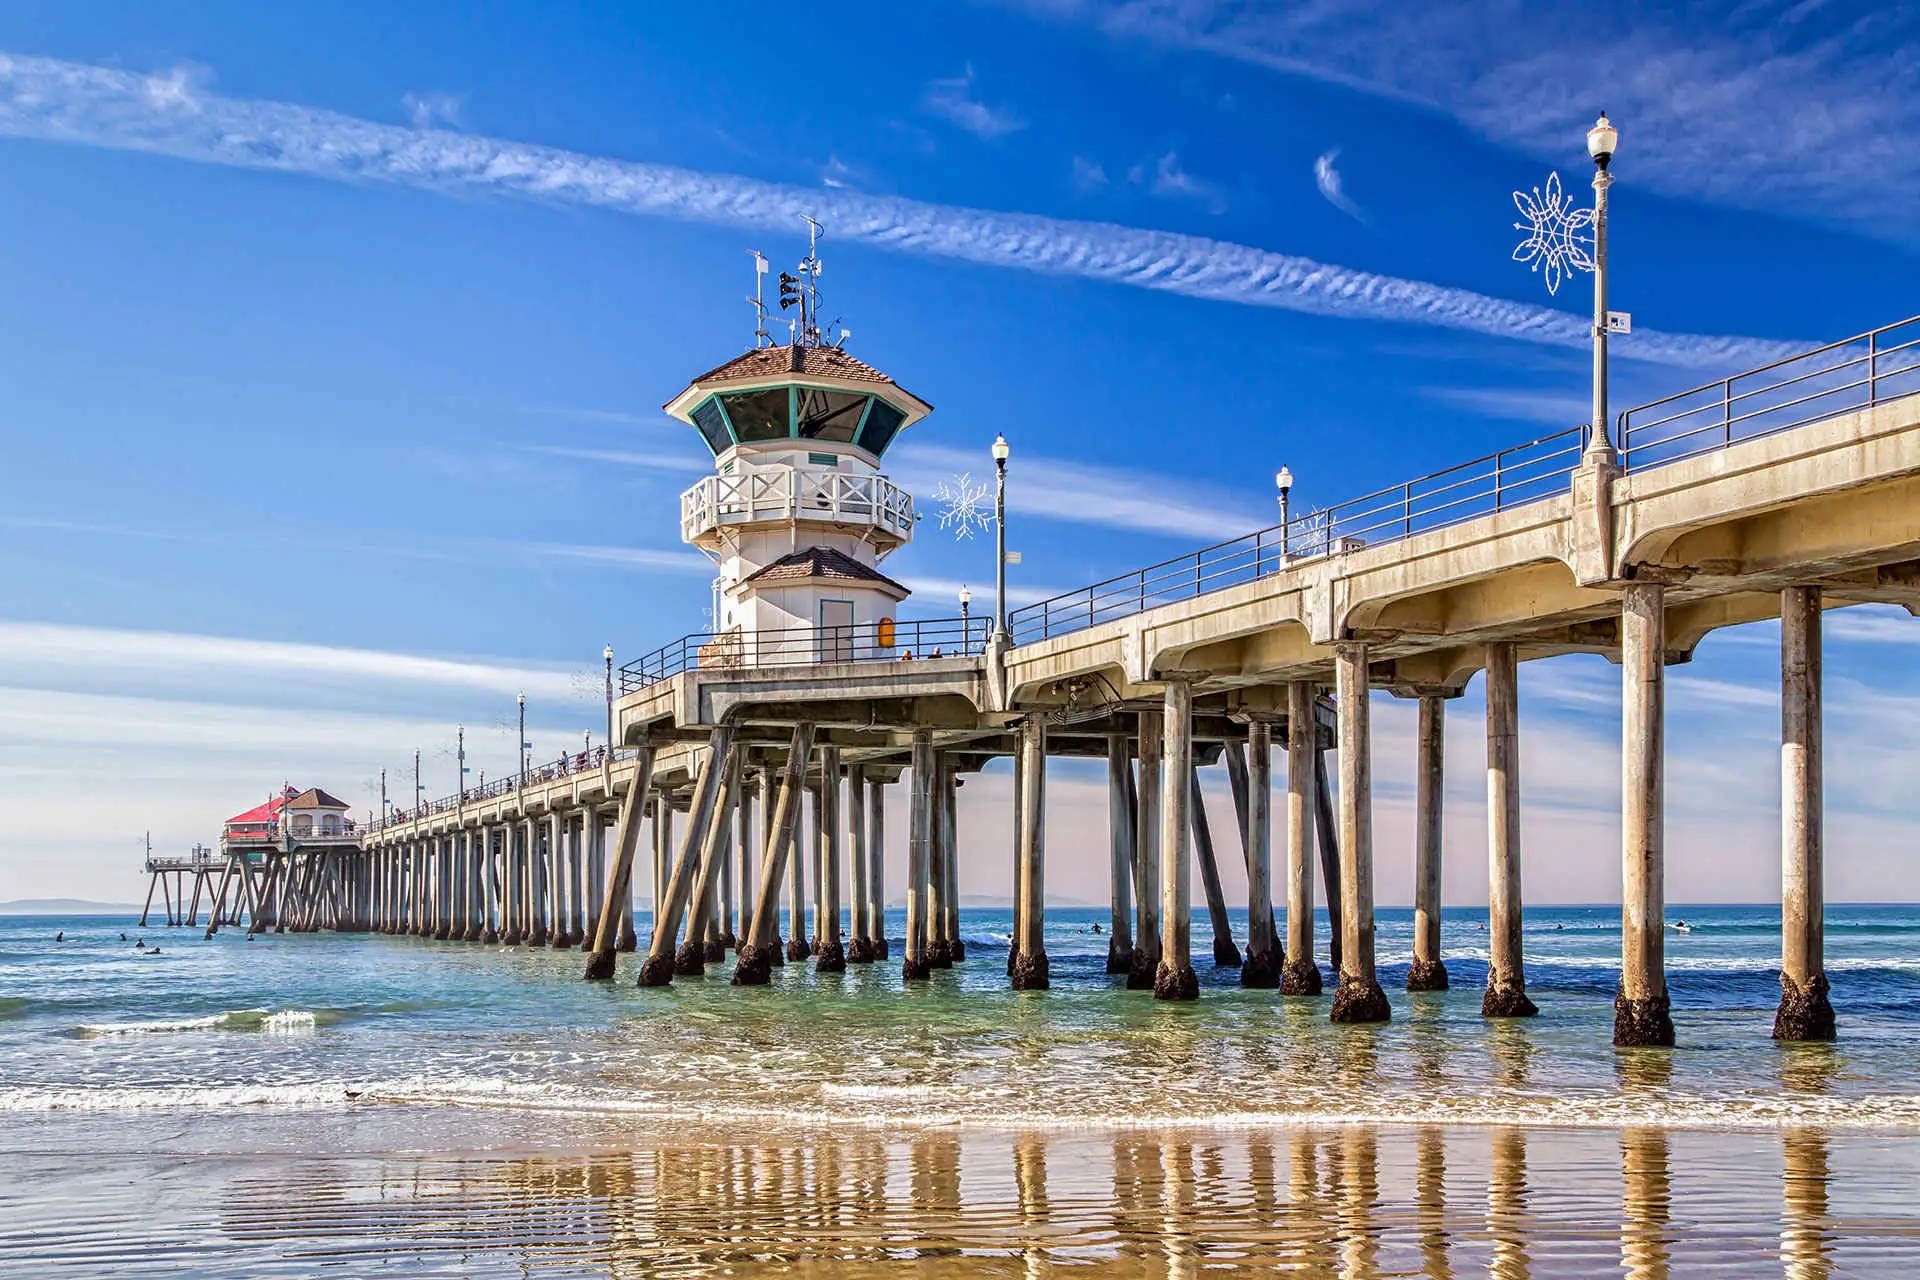 huntington state beach pier; Courtesy of Ken Wolter/Shutterstock